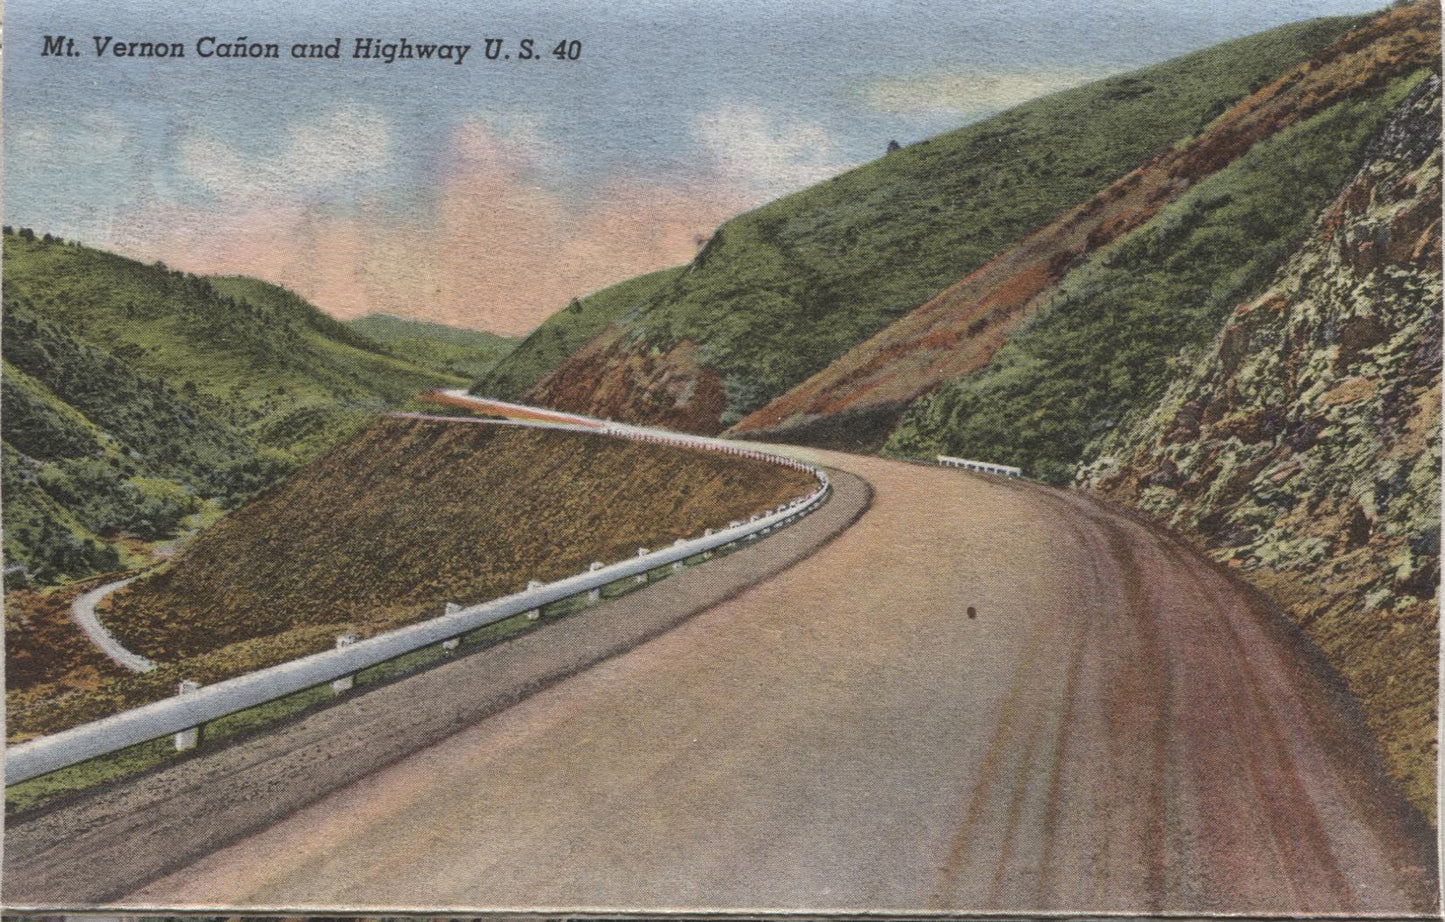 Highway U.S. 40 "The Victory Highway" Vintage Souvenir Postcard Folder